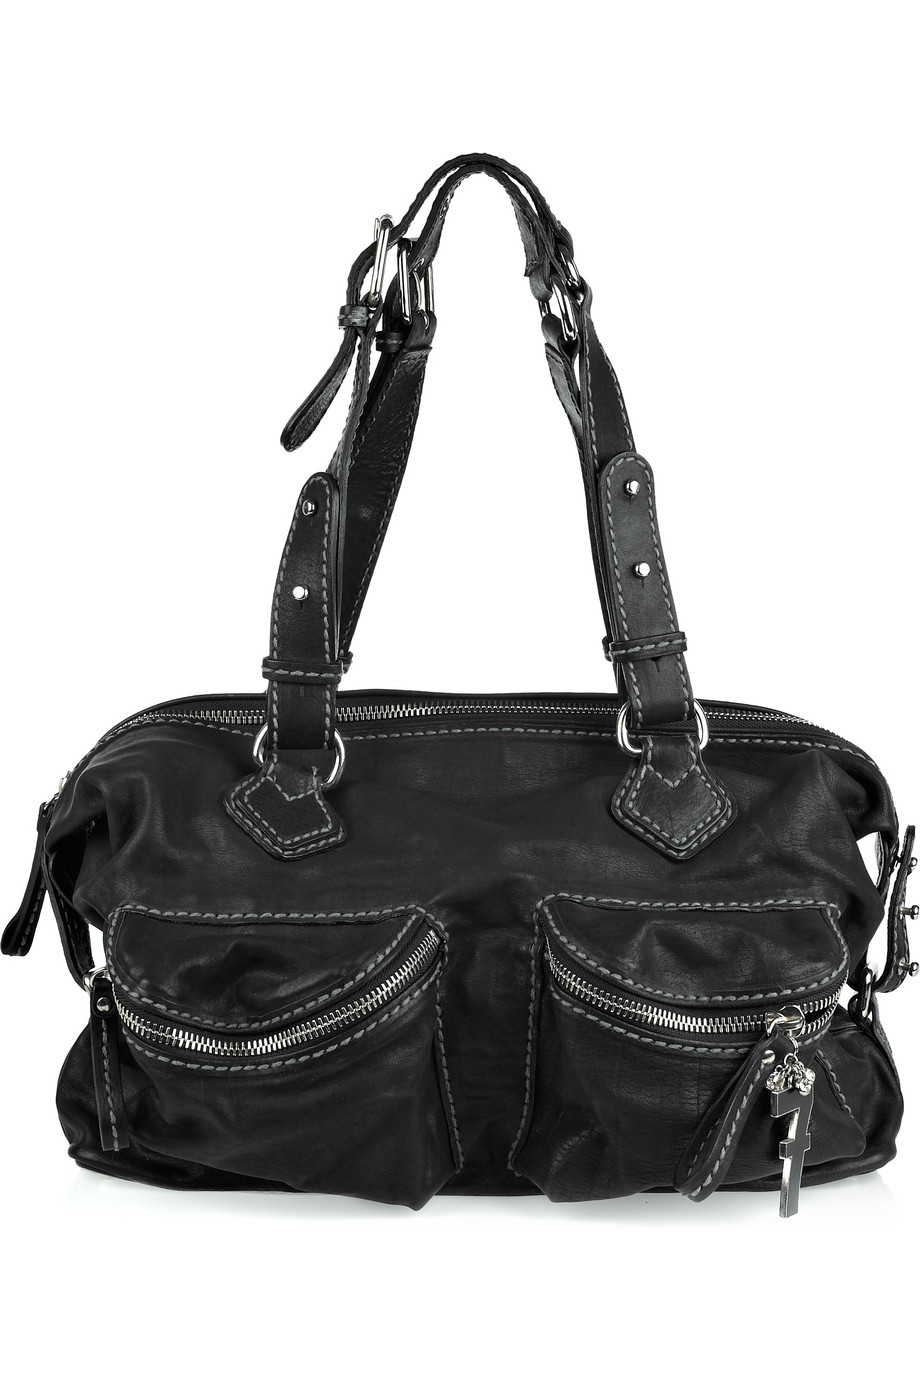 Sonia Rykiel Sierra Leather Shoulder Bag in Black | Lyst